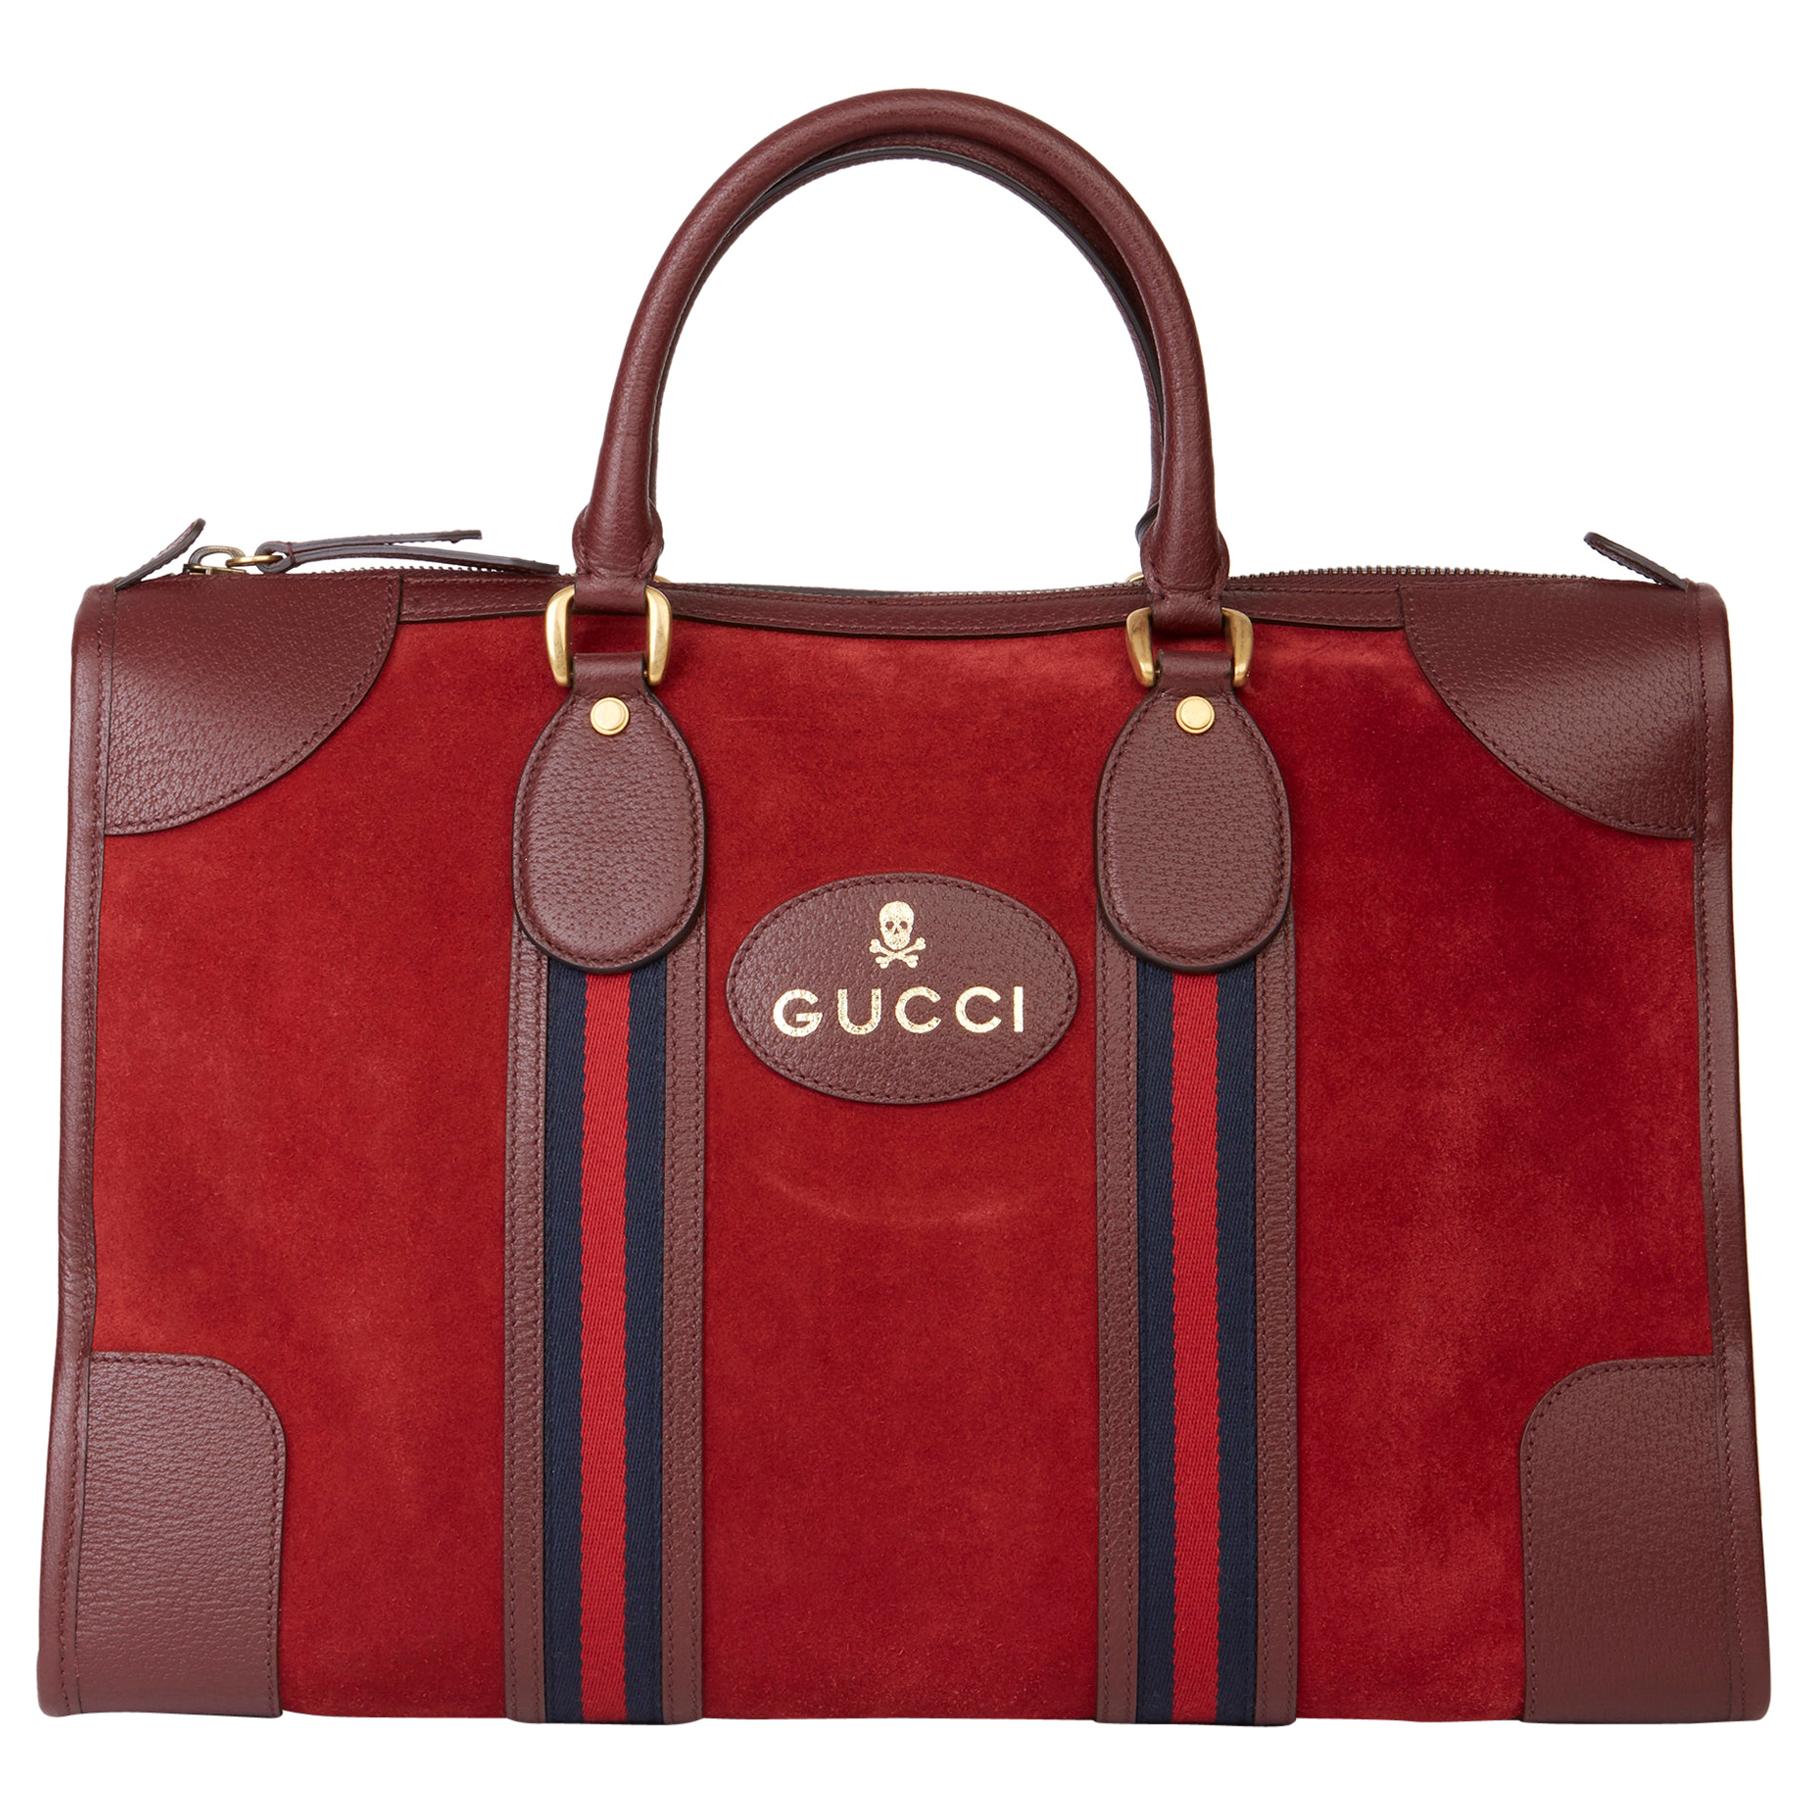 2019 Gucci Red Suede & Burgundy Pigskin Web Medium Duffle Bag